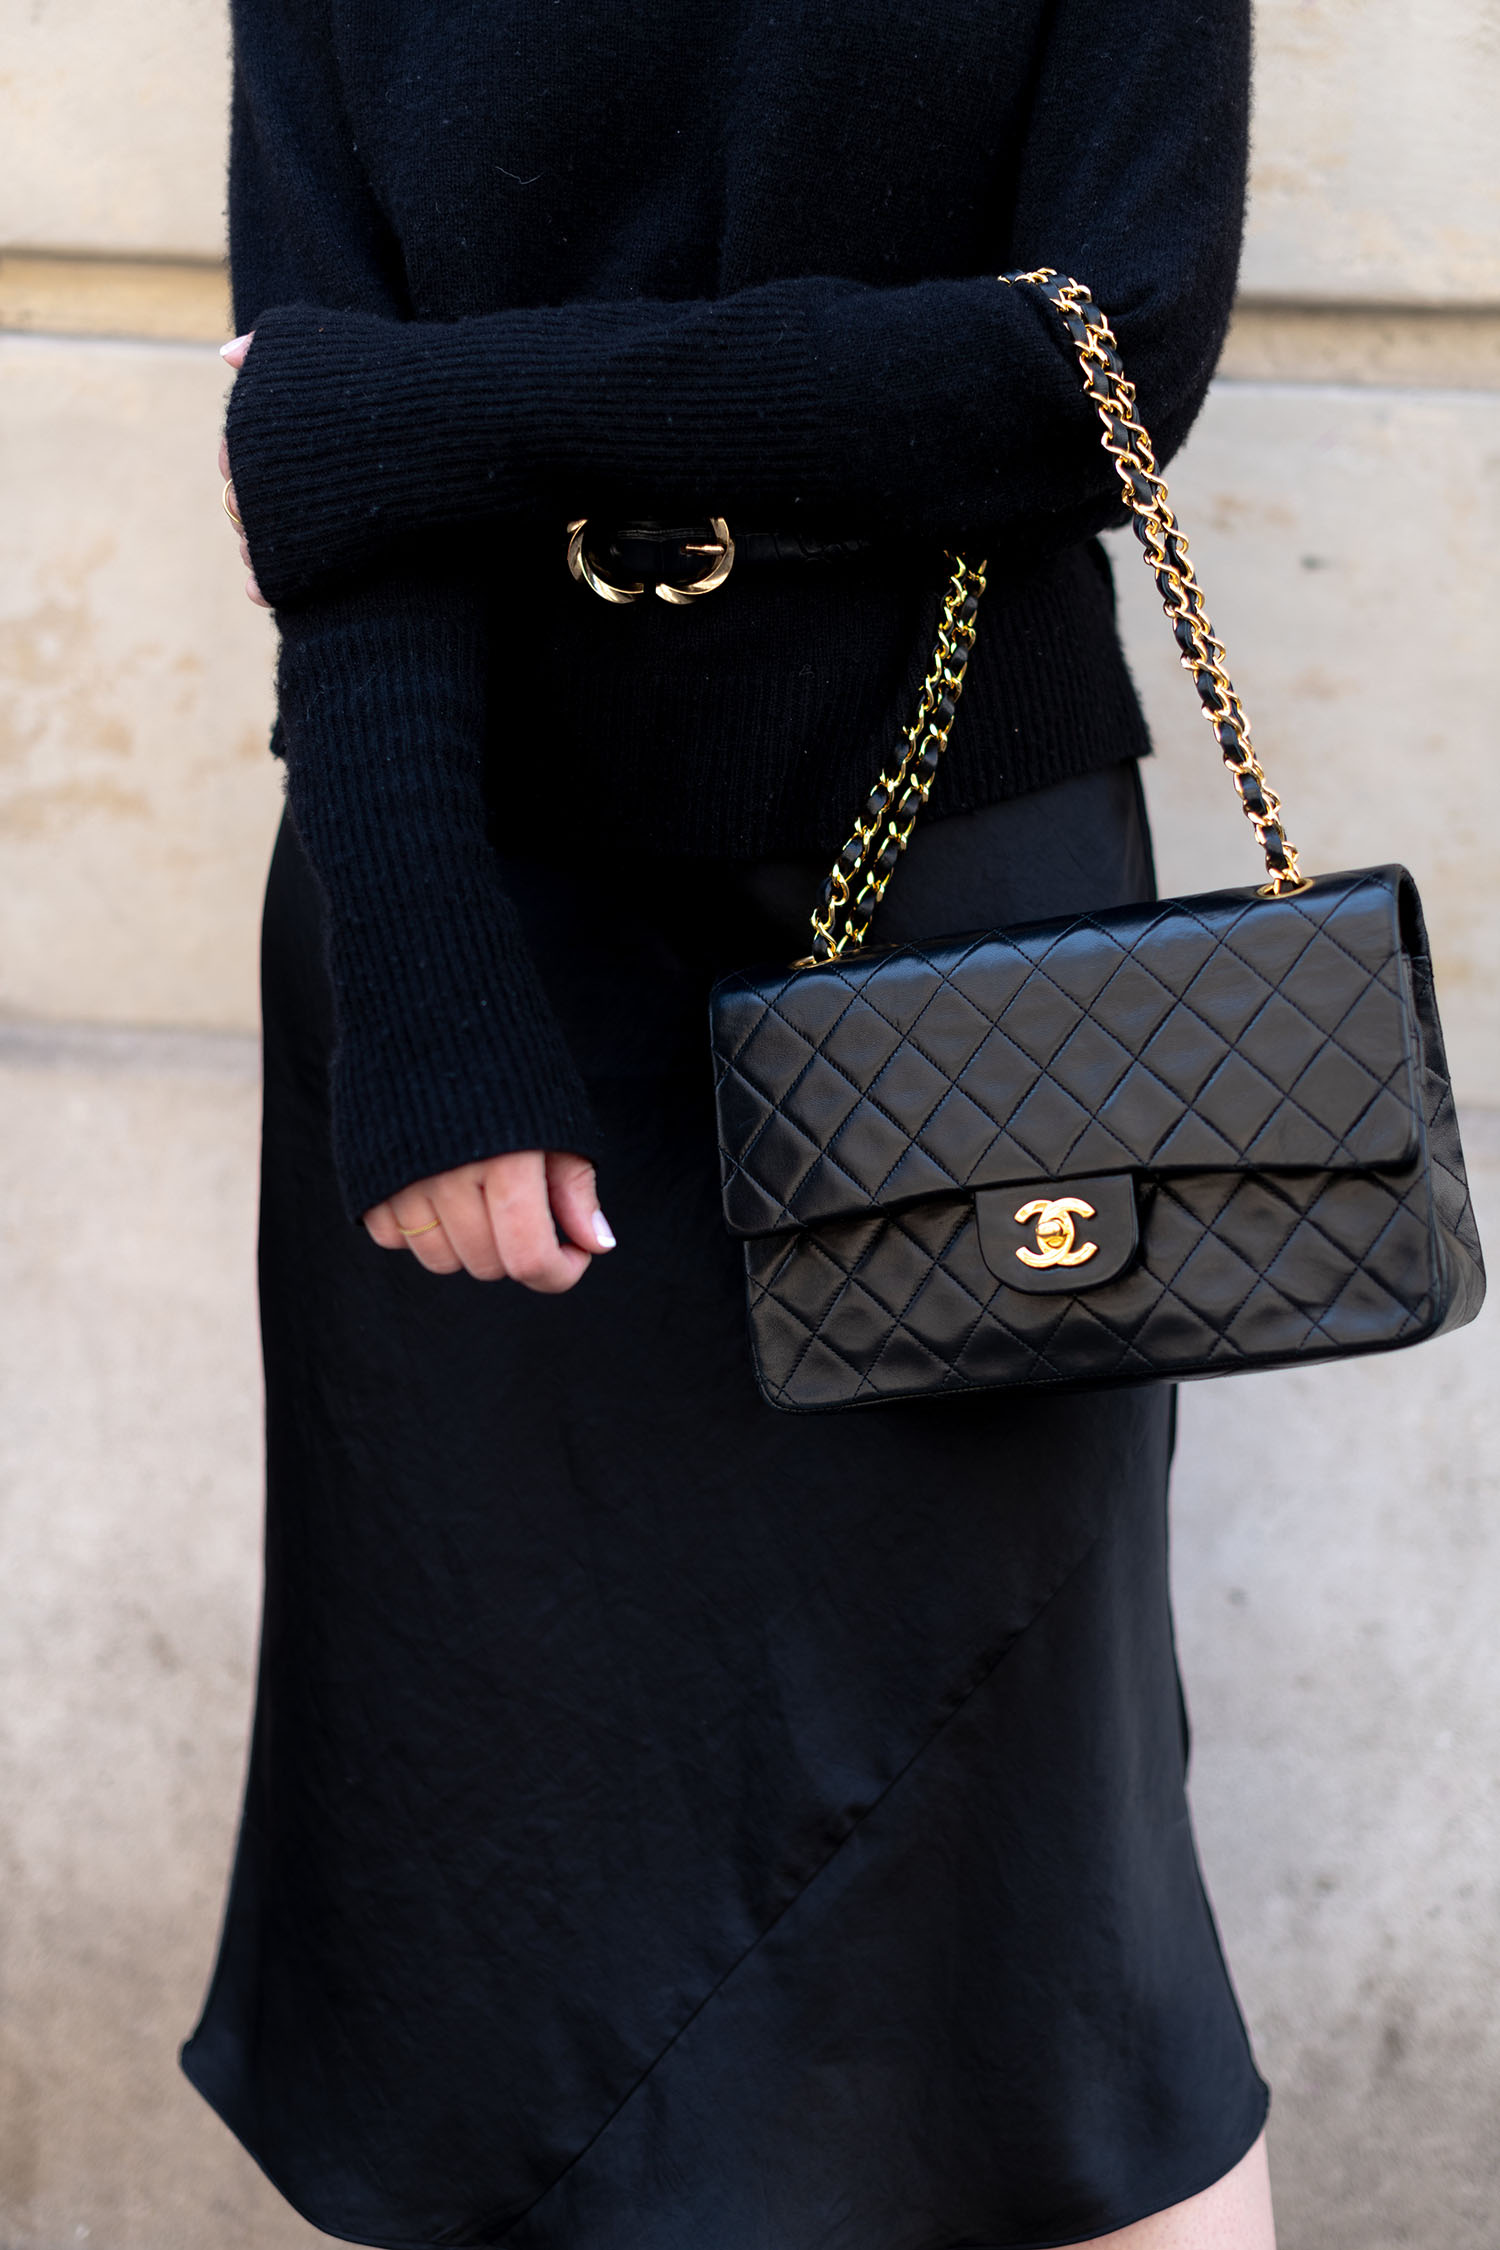 Coco & Voltaire - Chanel double flat handbag, Mango belt, Wilfred dress